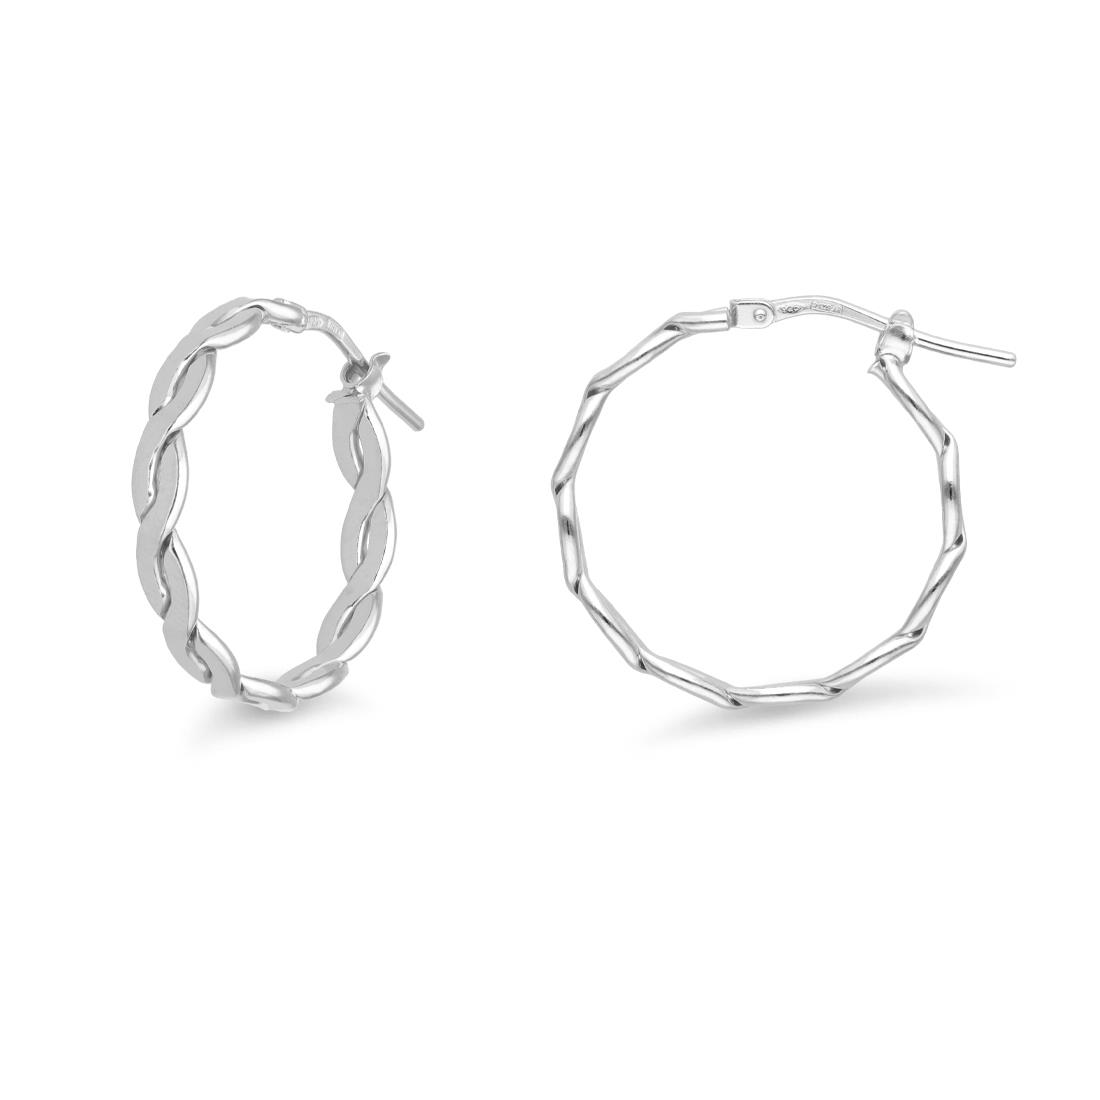 Hula Hoop collection woven hoop earrings in 925 rhodium-plated silver - LUXURY MILANO